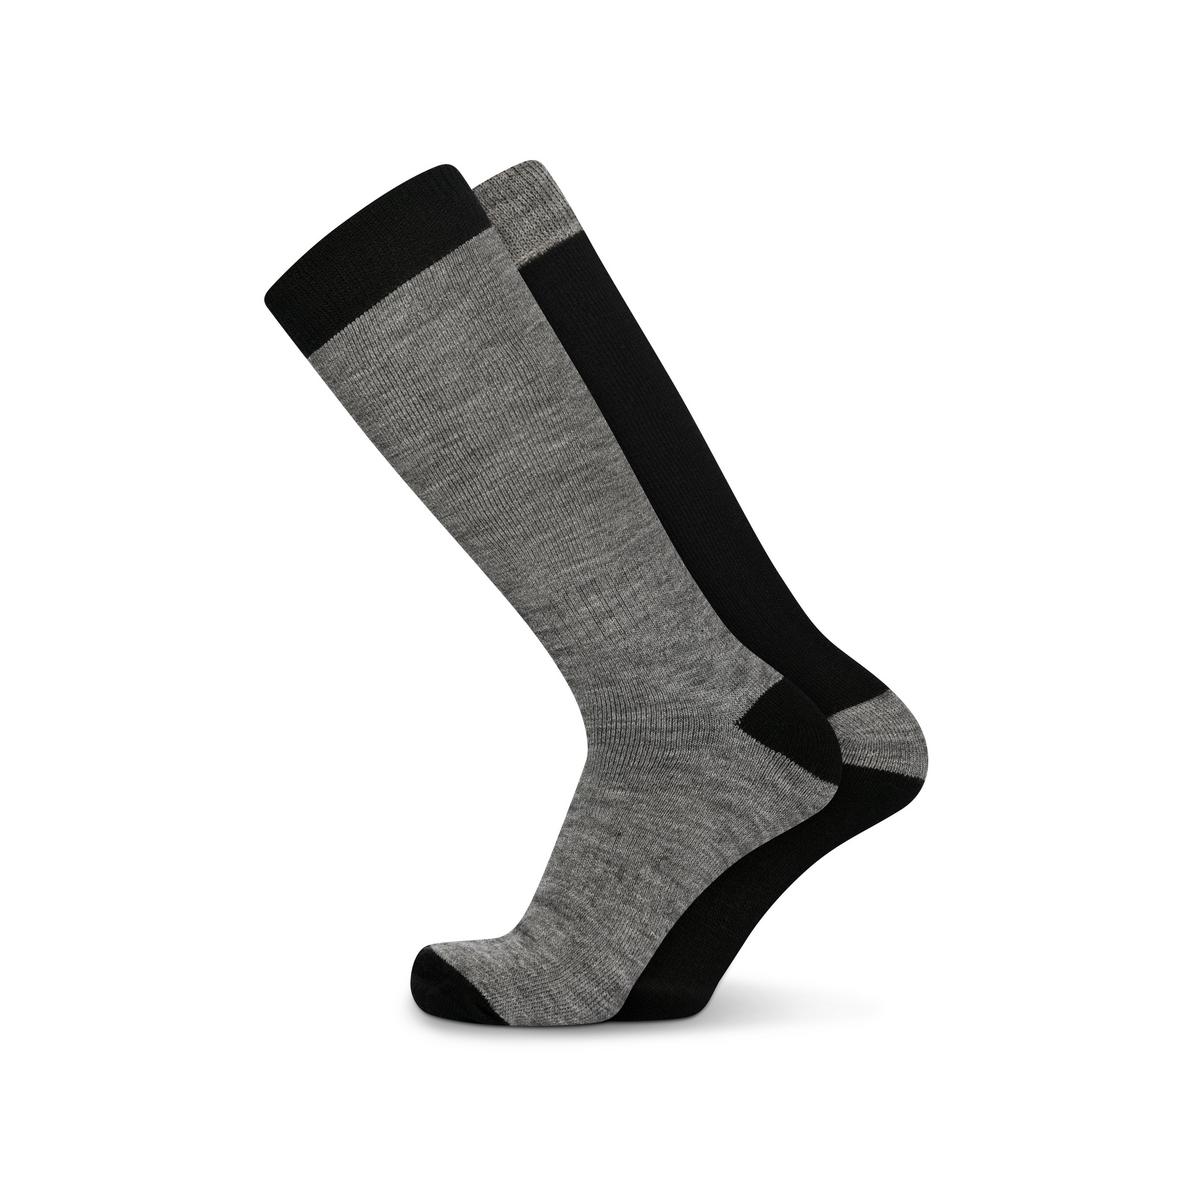 Sundown Men's 2 Pack Ski Socks - Black/Grey